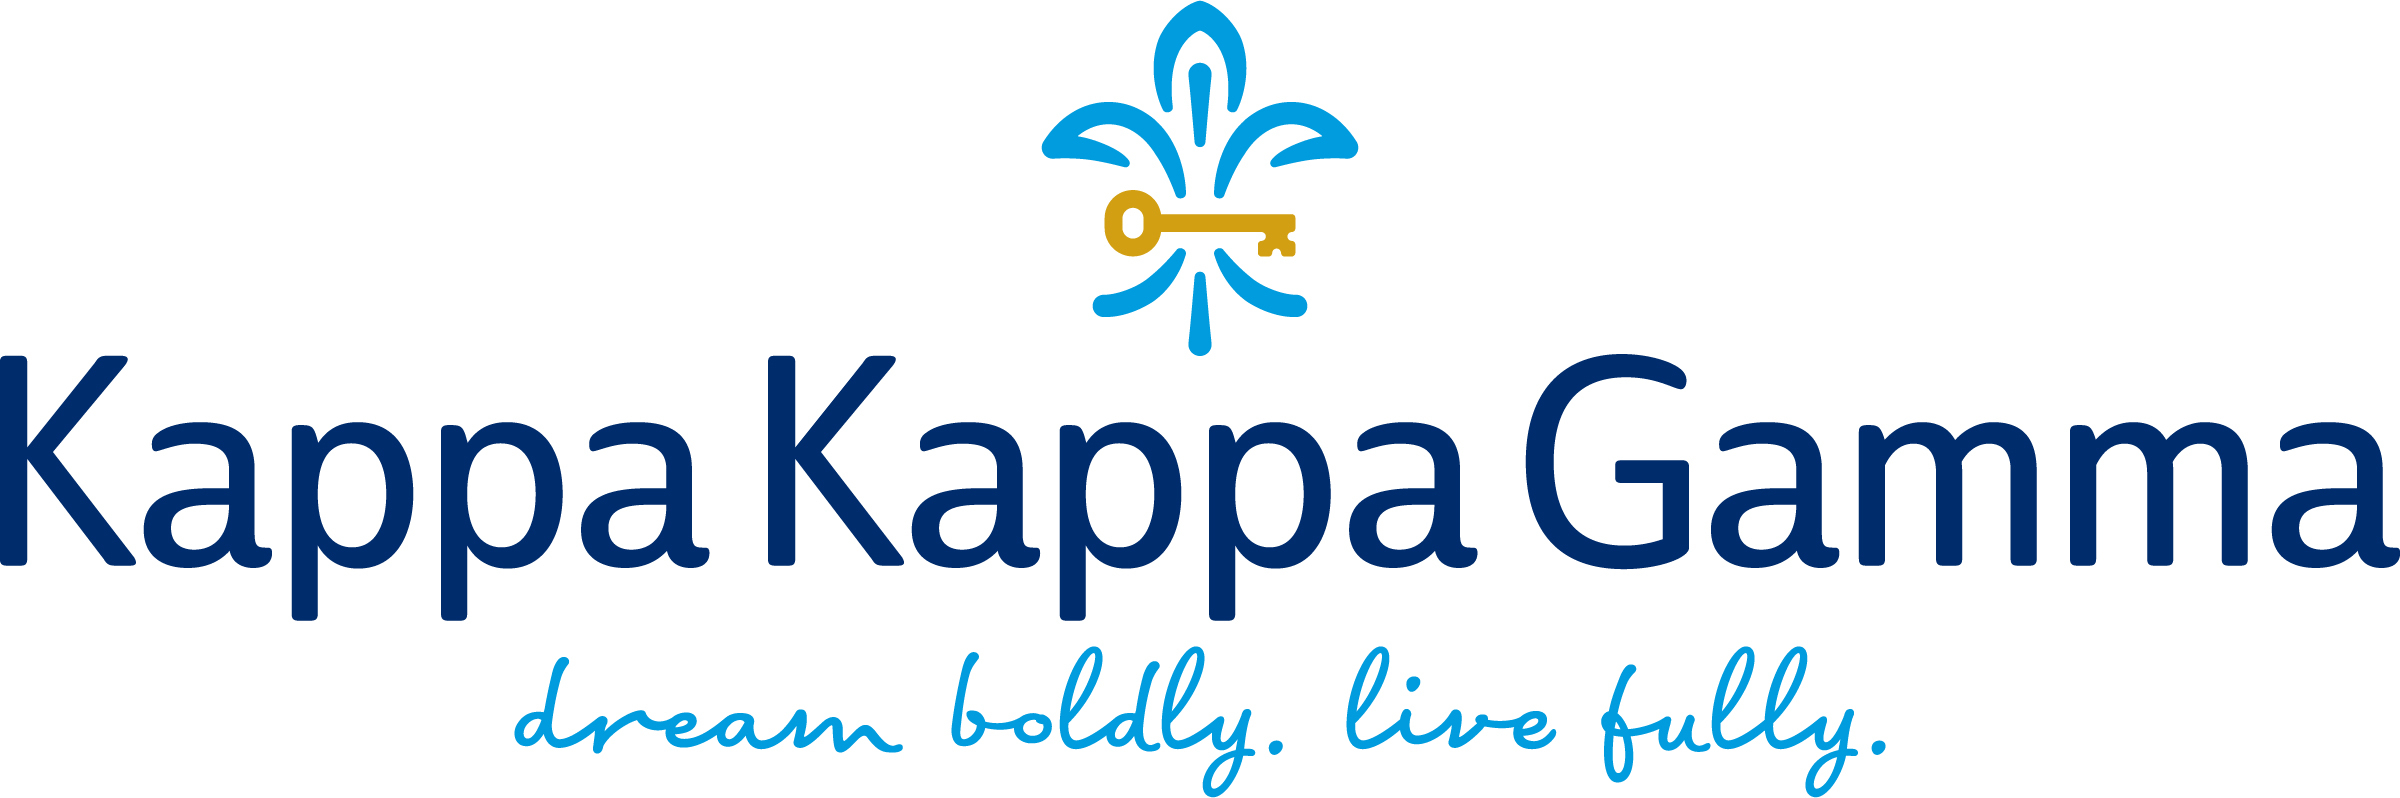 Kappa Kappa Gamma Illinois Wesleyan